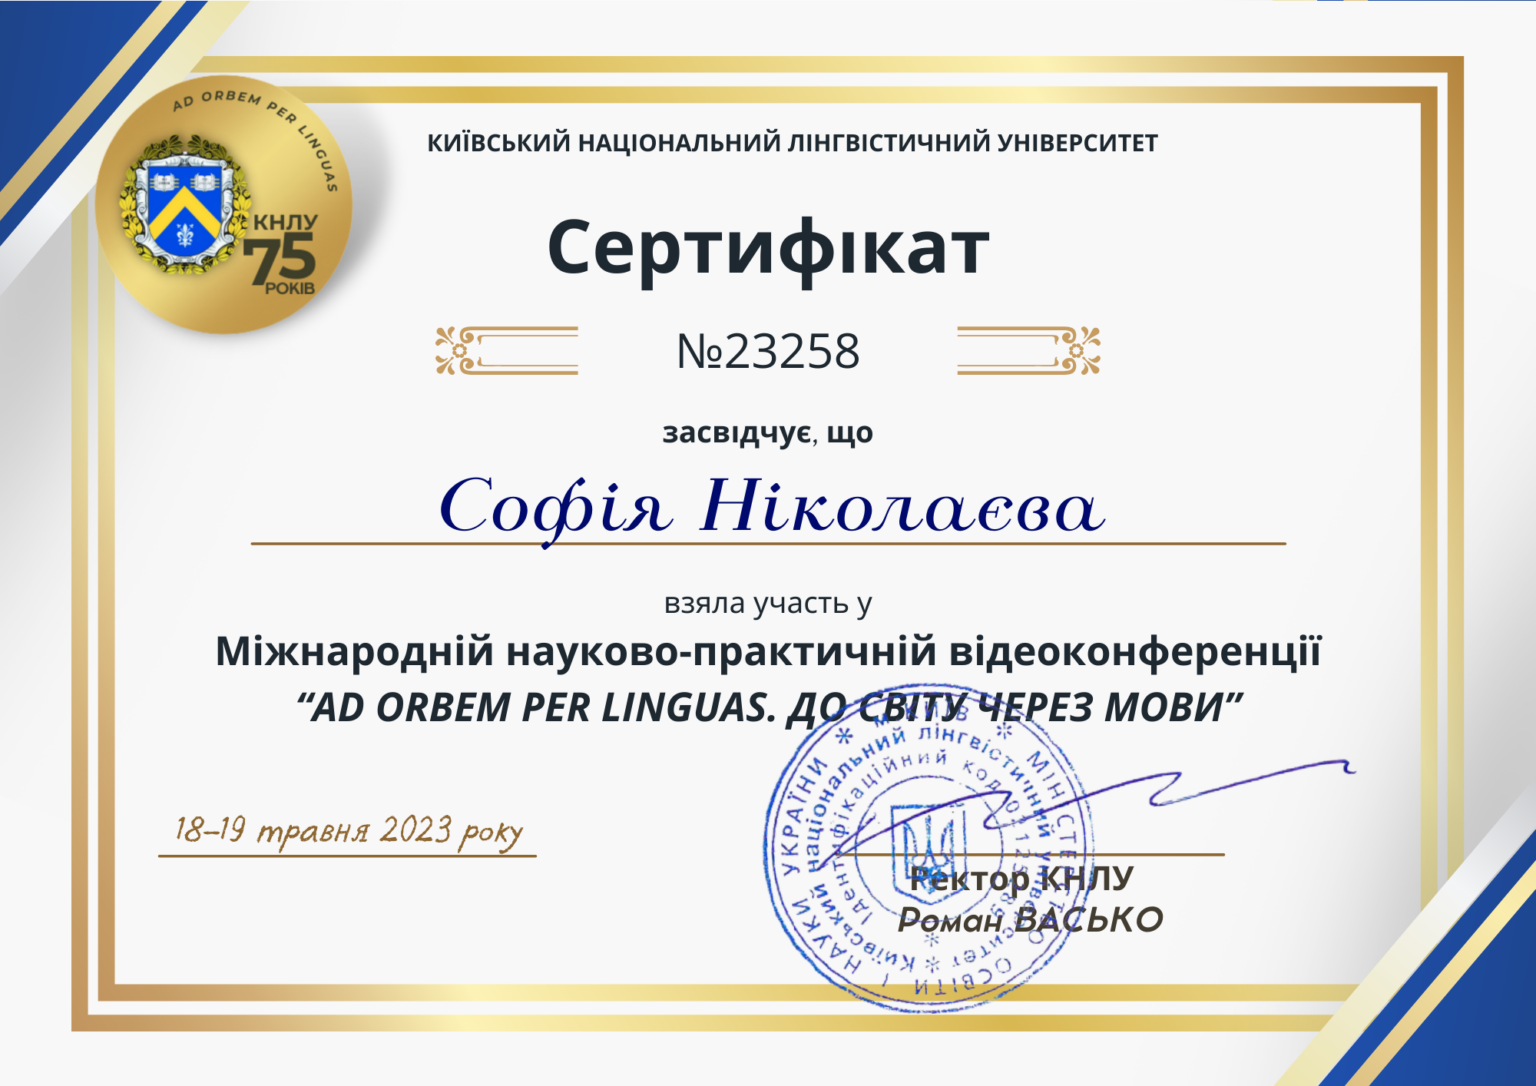 Ніколаєва сертифікат конф КНЛУ 05. 2023